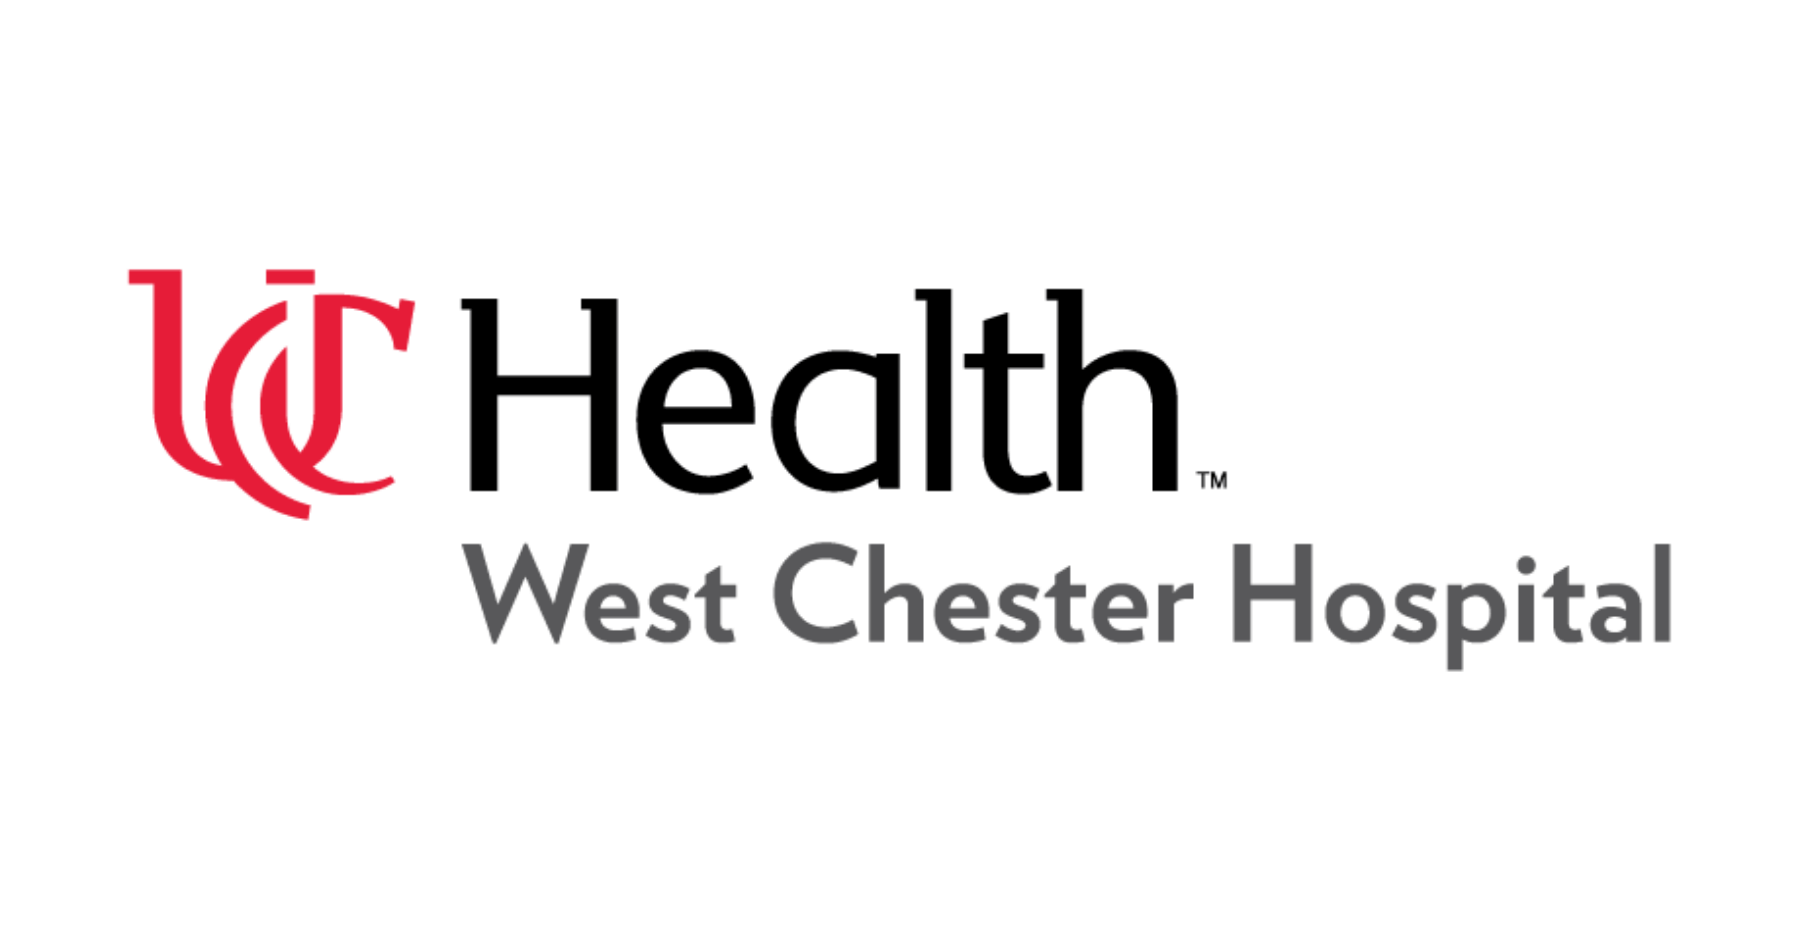 UC Health West Chester Hospital Logo